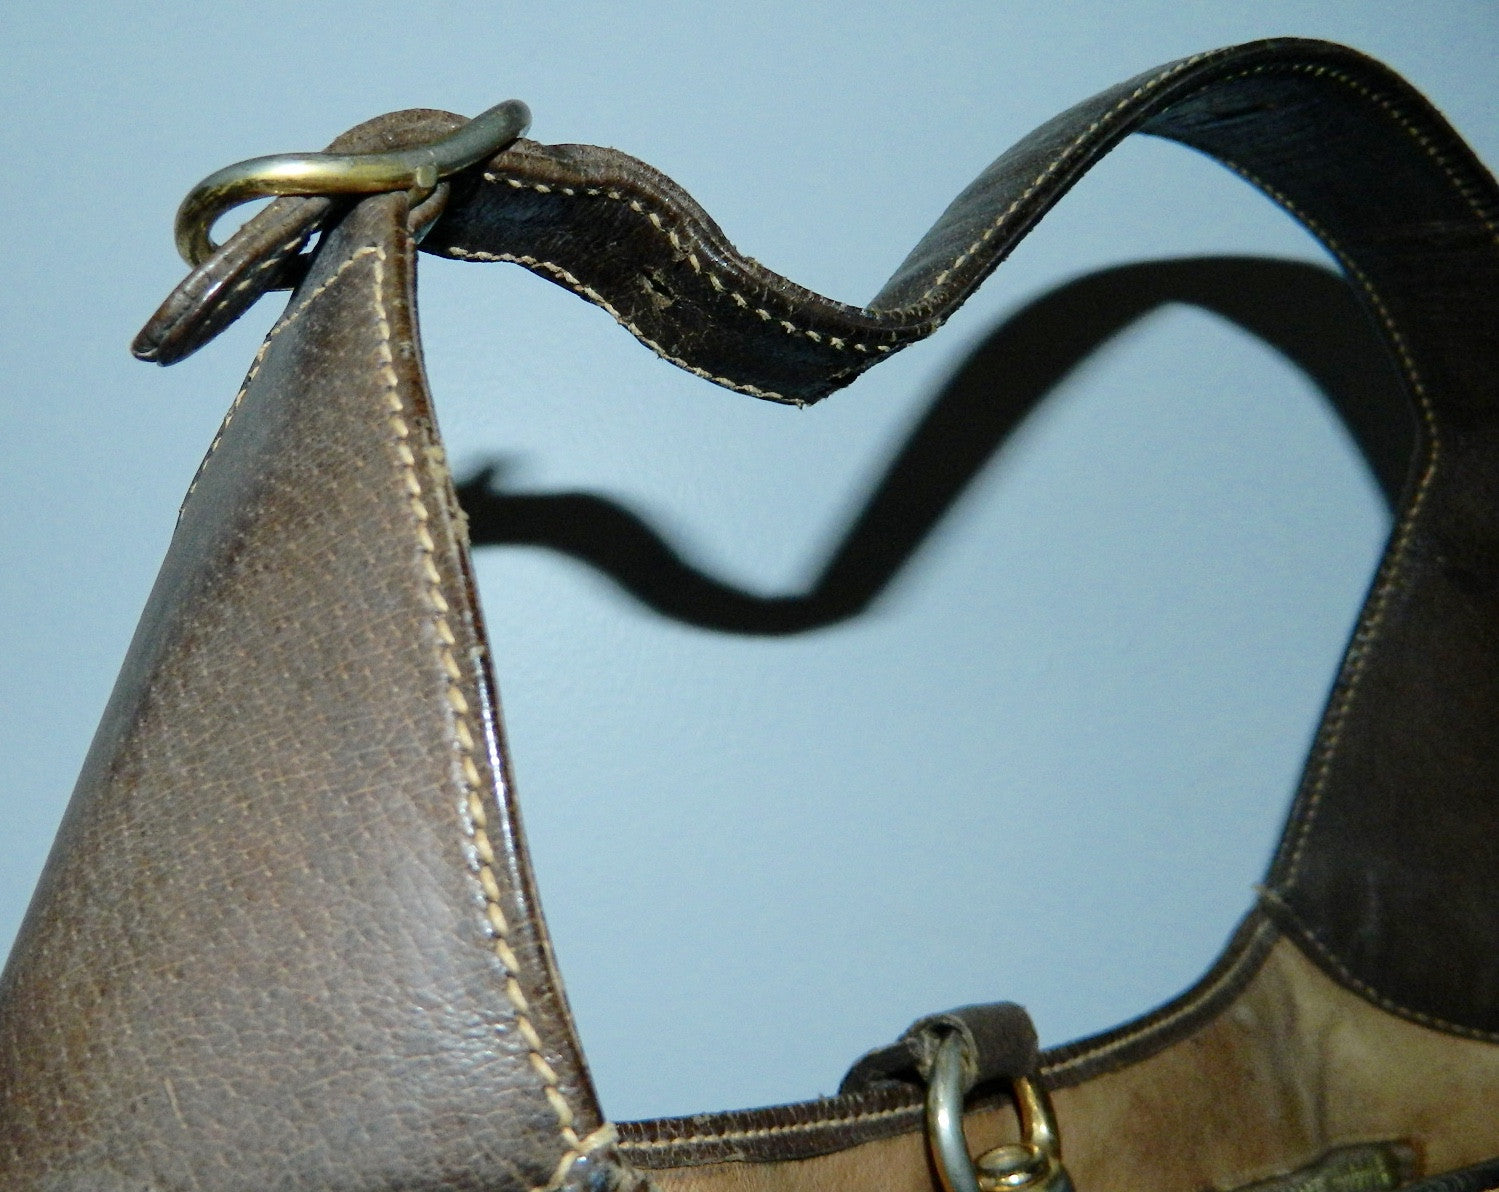 vintage GUCCI bag brown leather 1960s Jackie O Bouvier purse